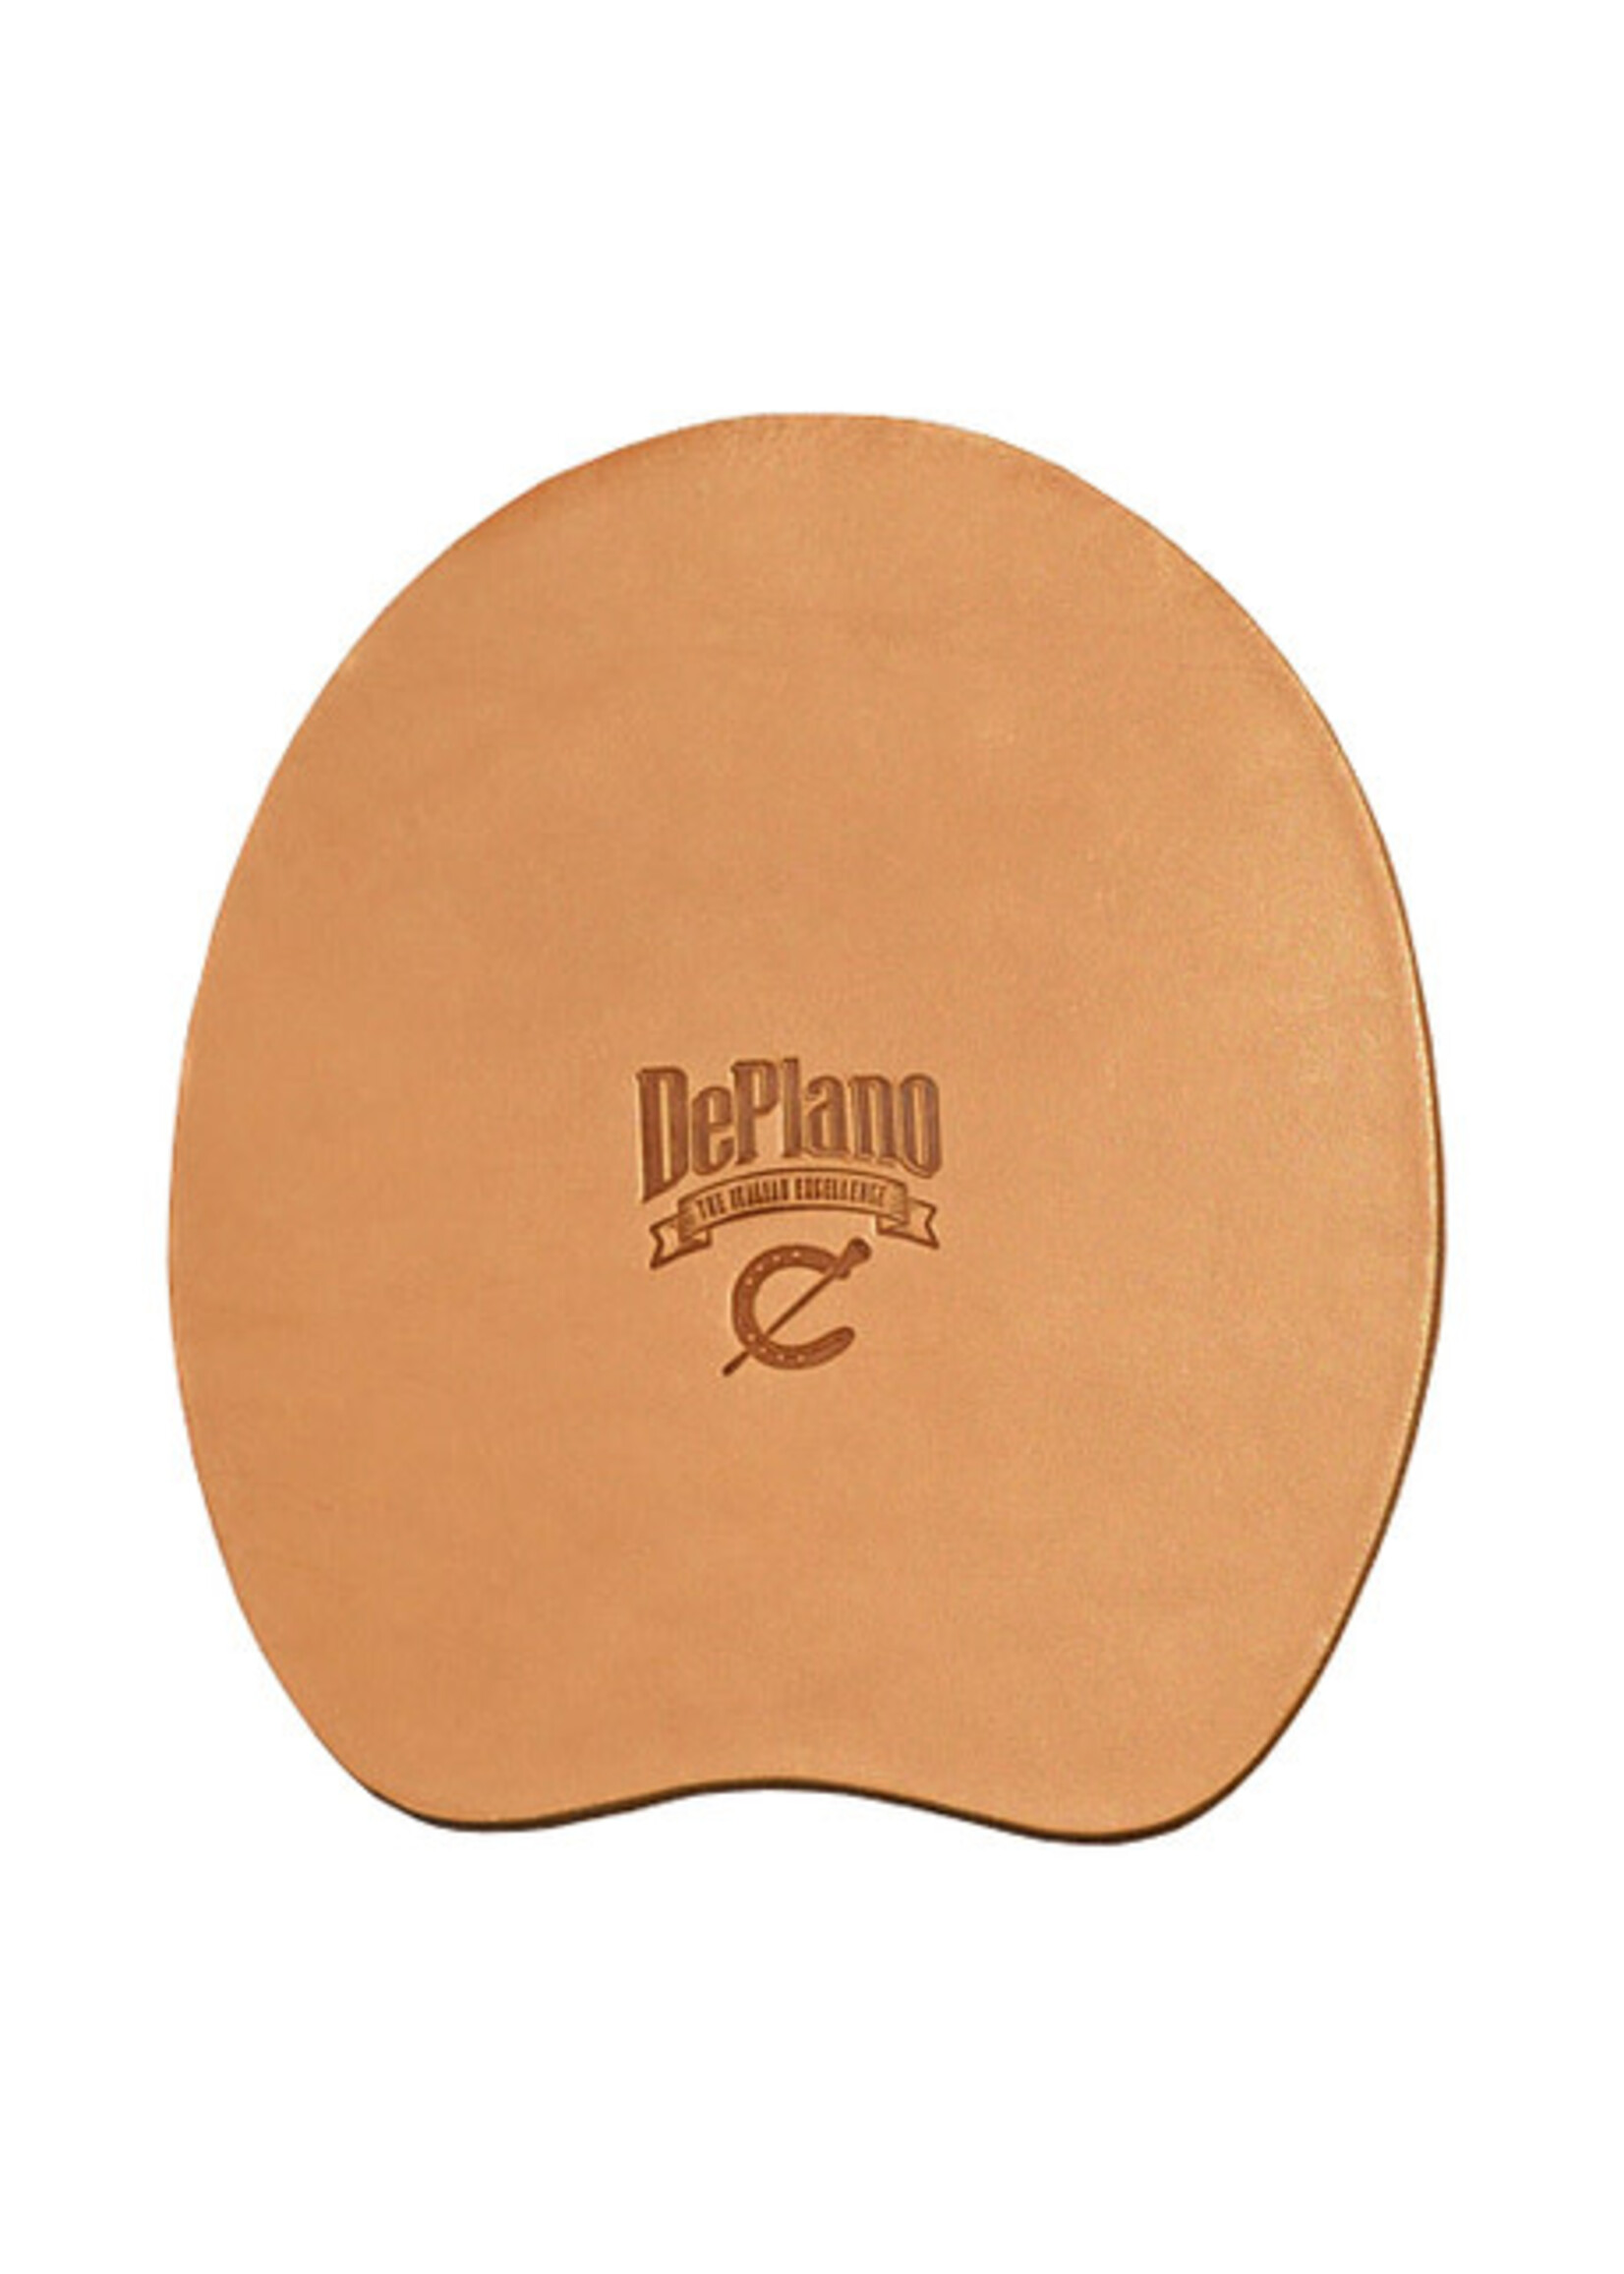 DePlano DePlano Leather Wedge Pads Pair